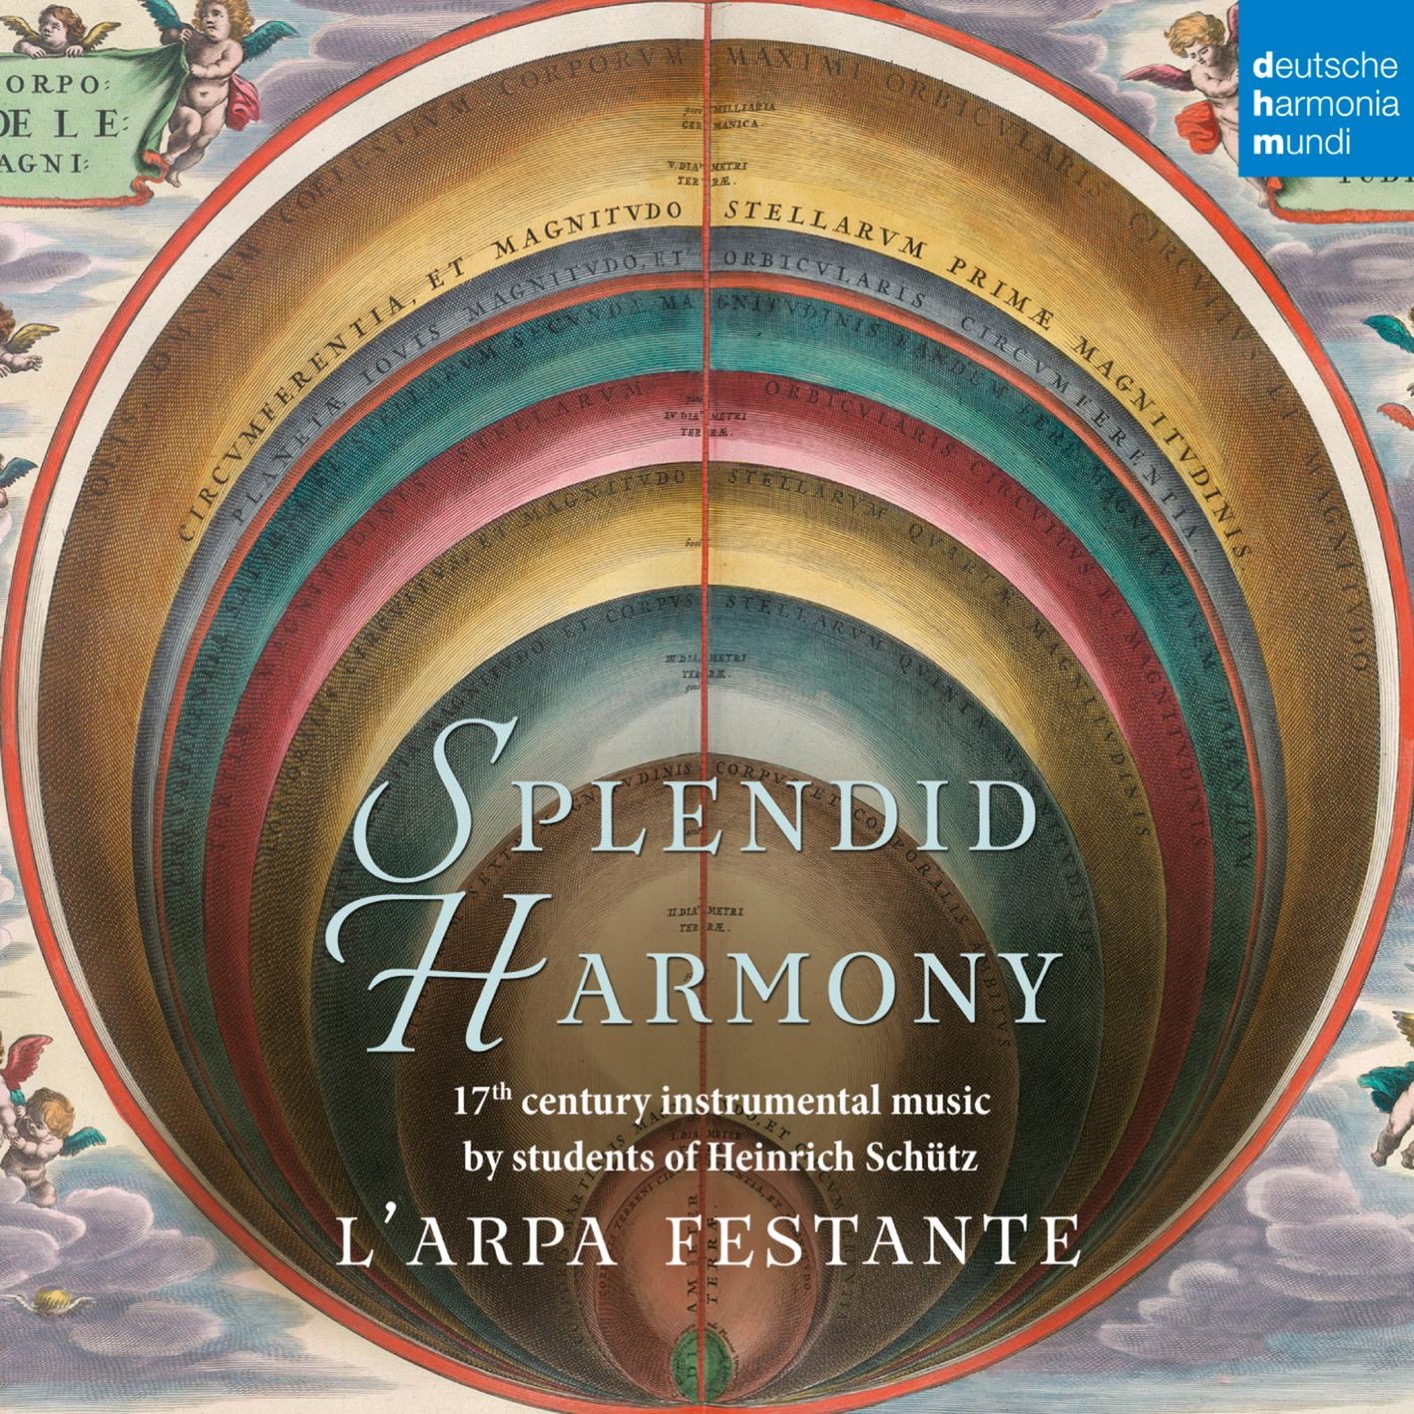 L’Arpa Festante - Splendid Harmony - 17th Century Instrumental Music by Students of Heinrich Schutz (2017) [Qobuz FLAC 24bit/96kHz]